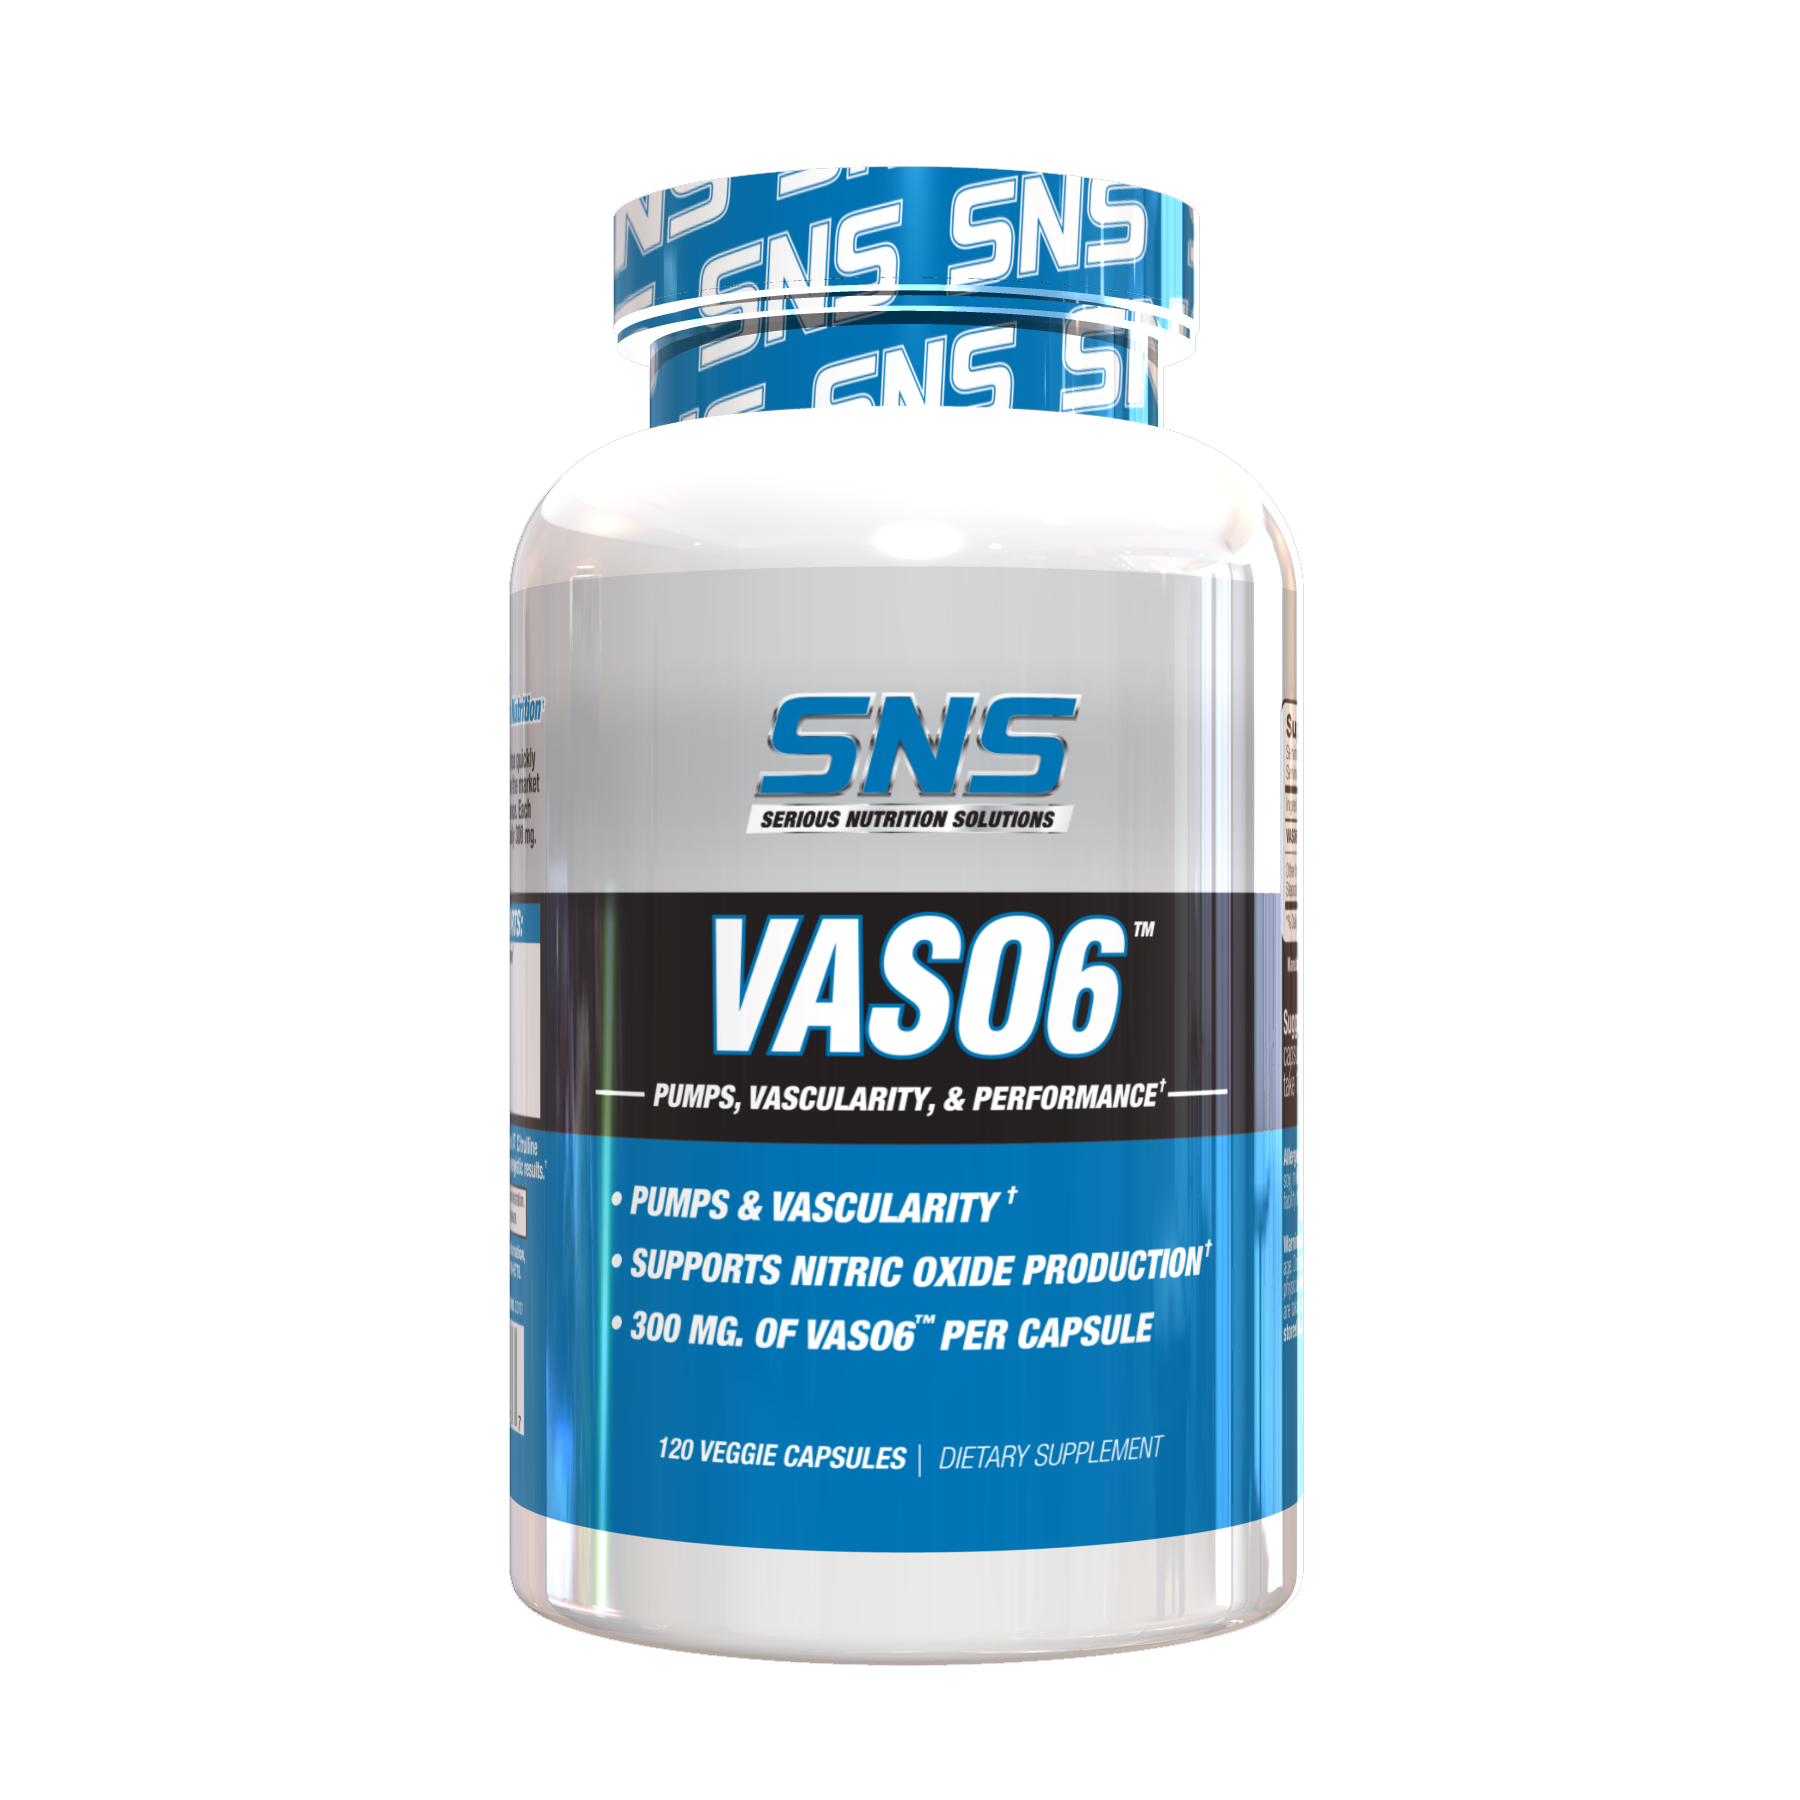 SNS VASO6 - A1 Supplements Store